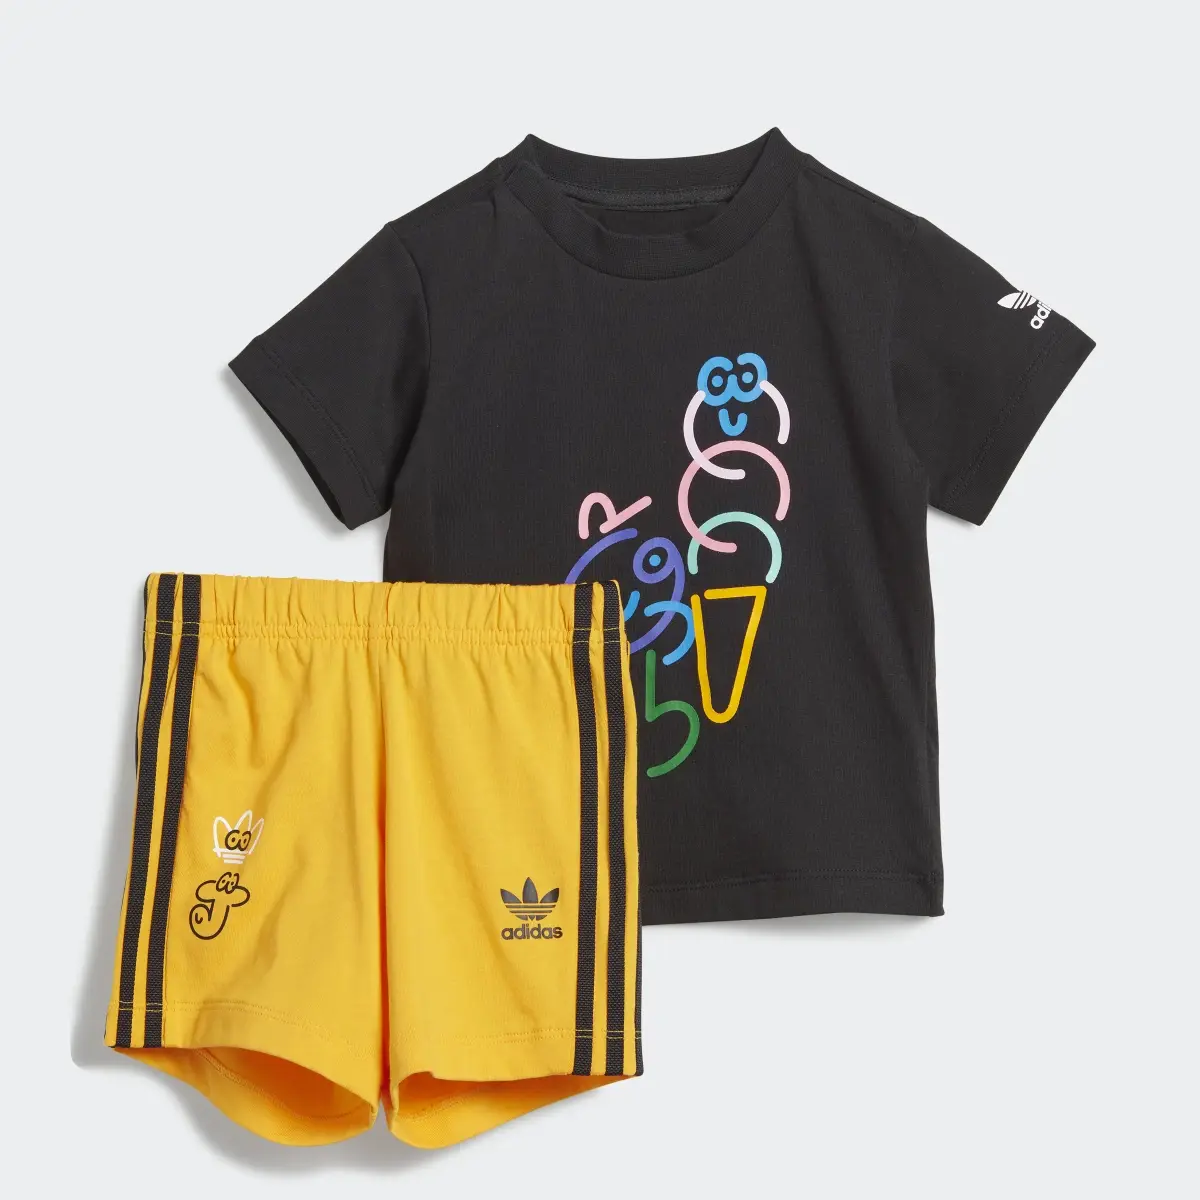 Adidas x James Jarvis Şort ve Tişört Takımı. 1